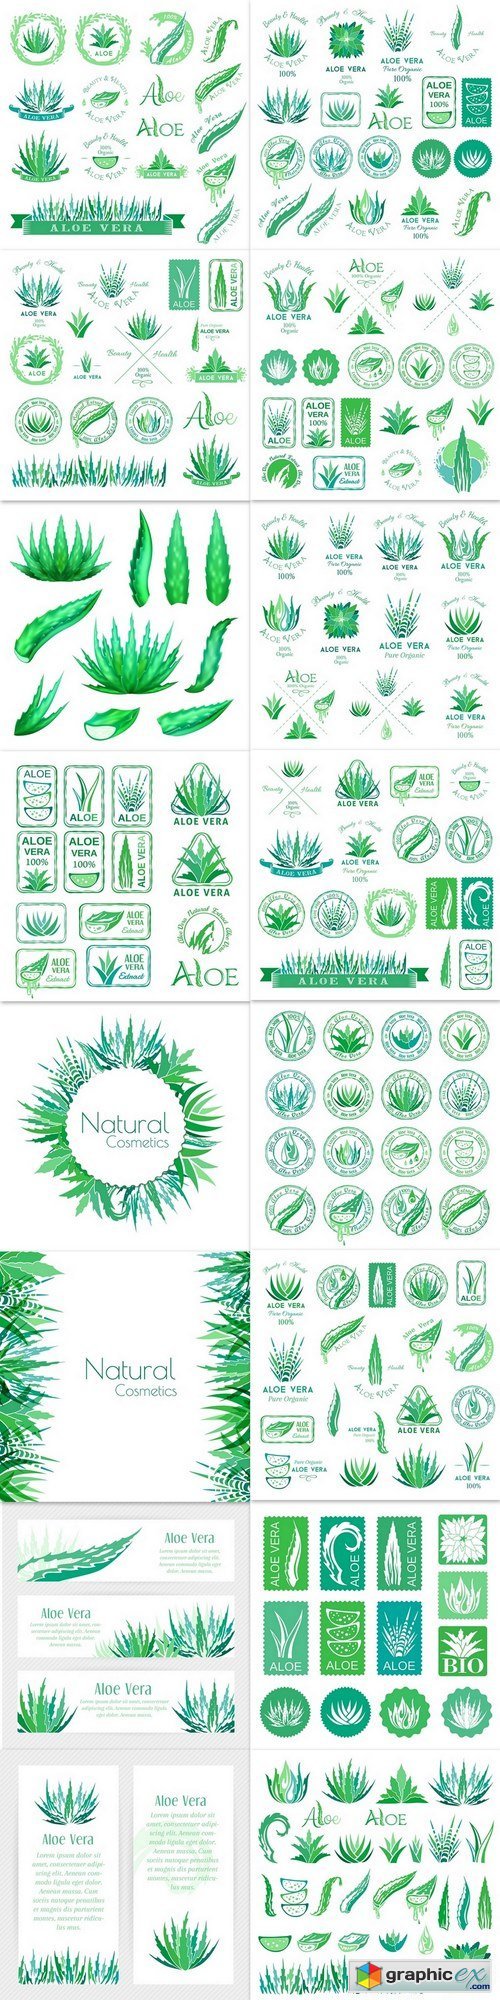 Aloe vera design elements. Logos, badges, icons